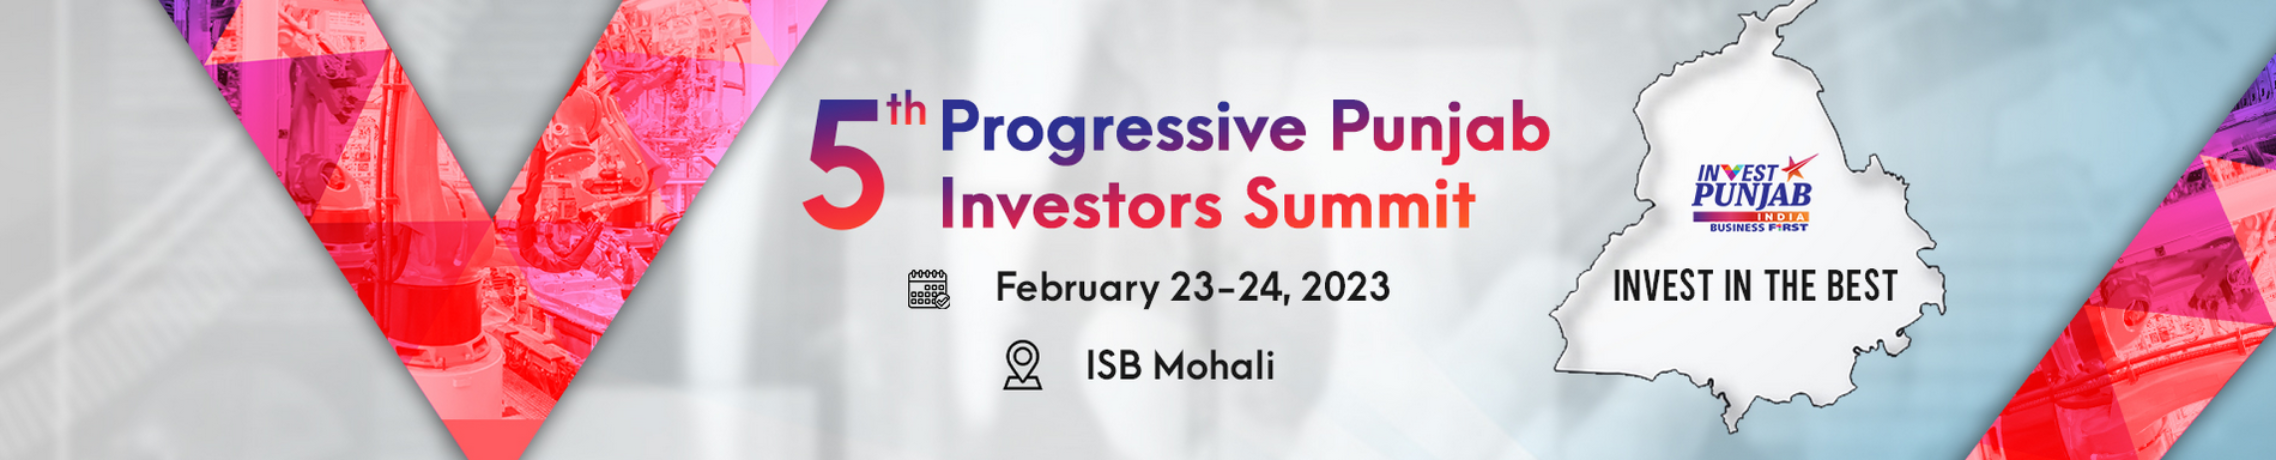 5th Progressive Punjab Investors Summit on 23 and 24 February 2023 at ISB in Mohali, India